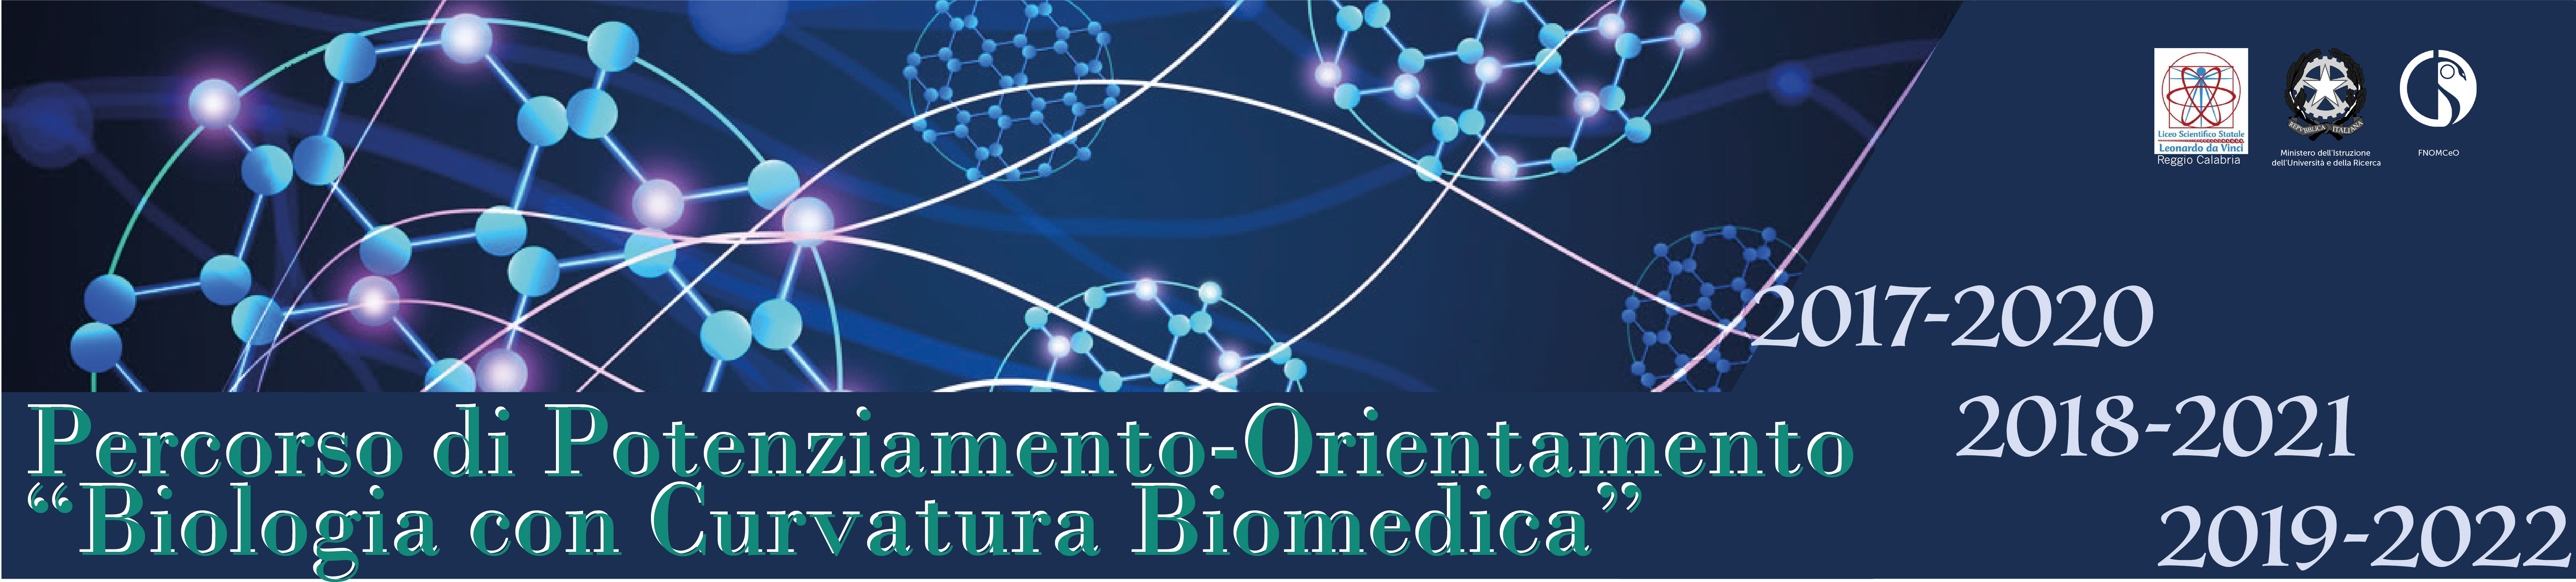 20170909 Biomedica 0002 BANNER